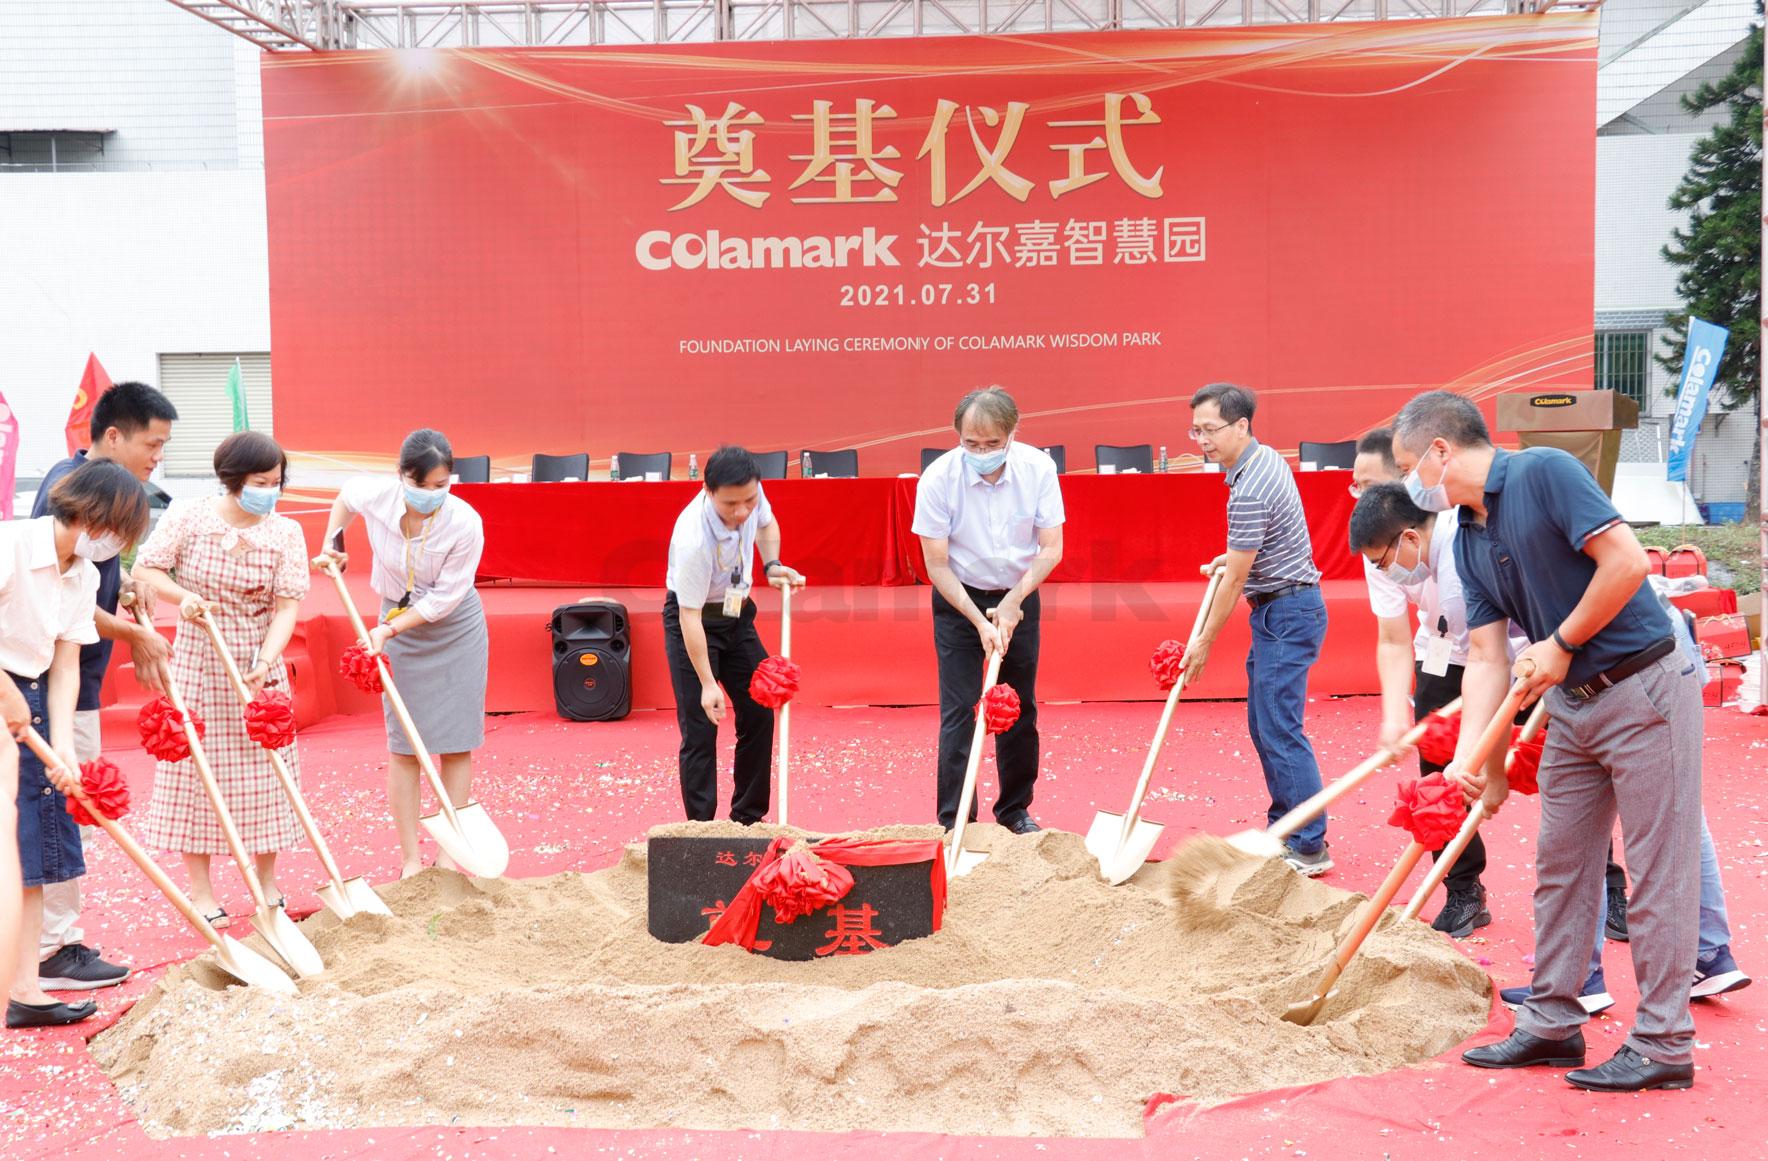 Colamark Wisdom Park Foundation Laying Ceremony